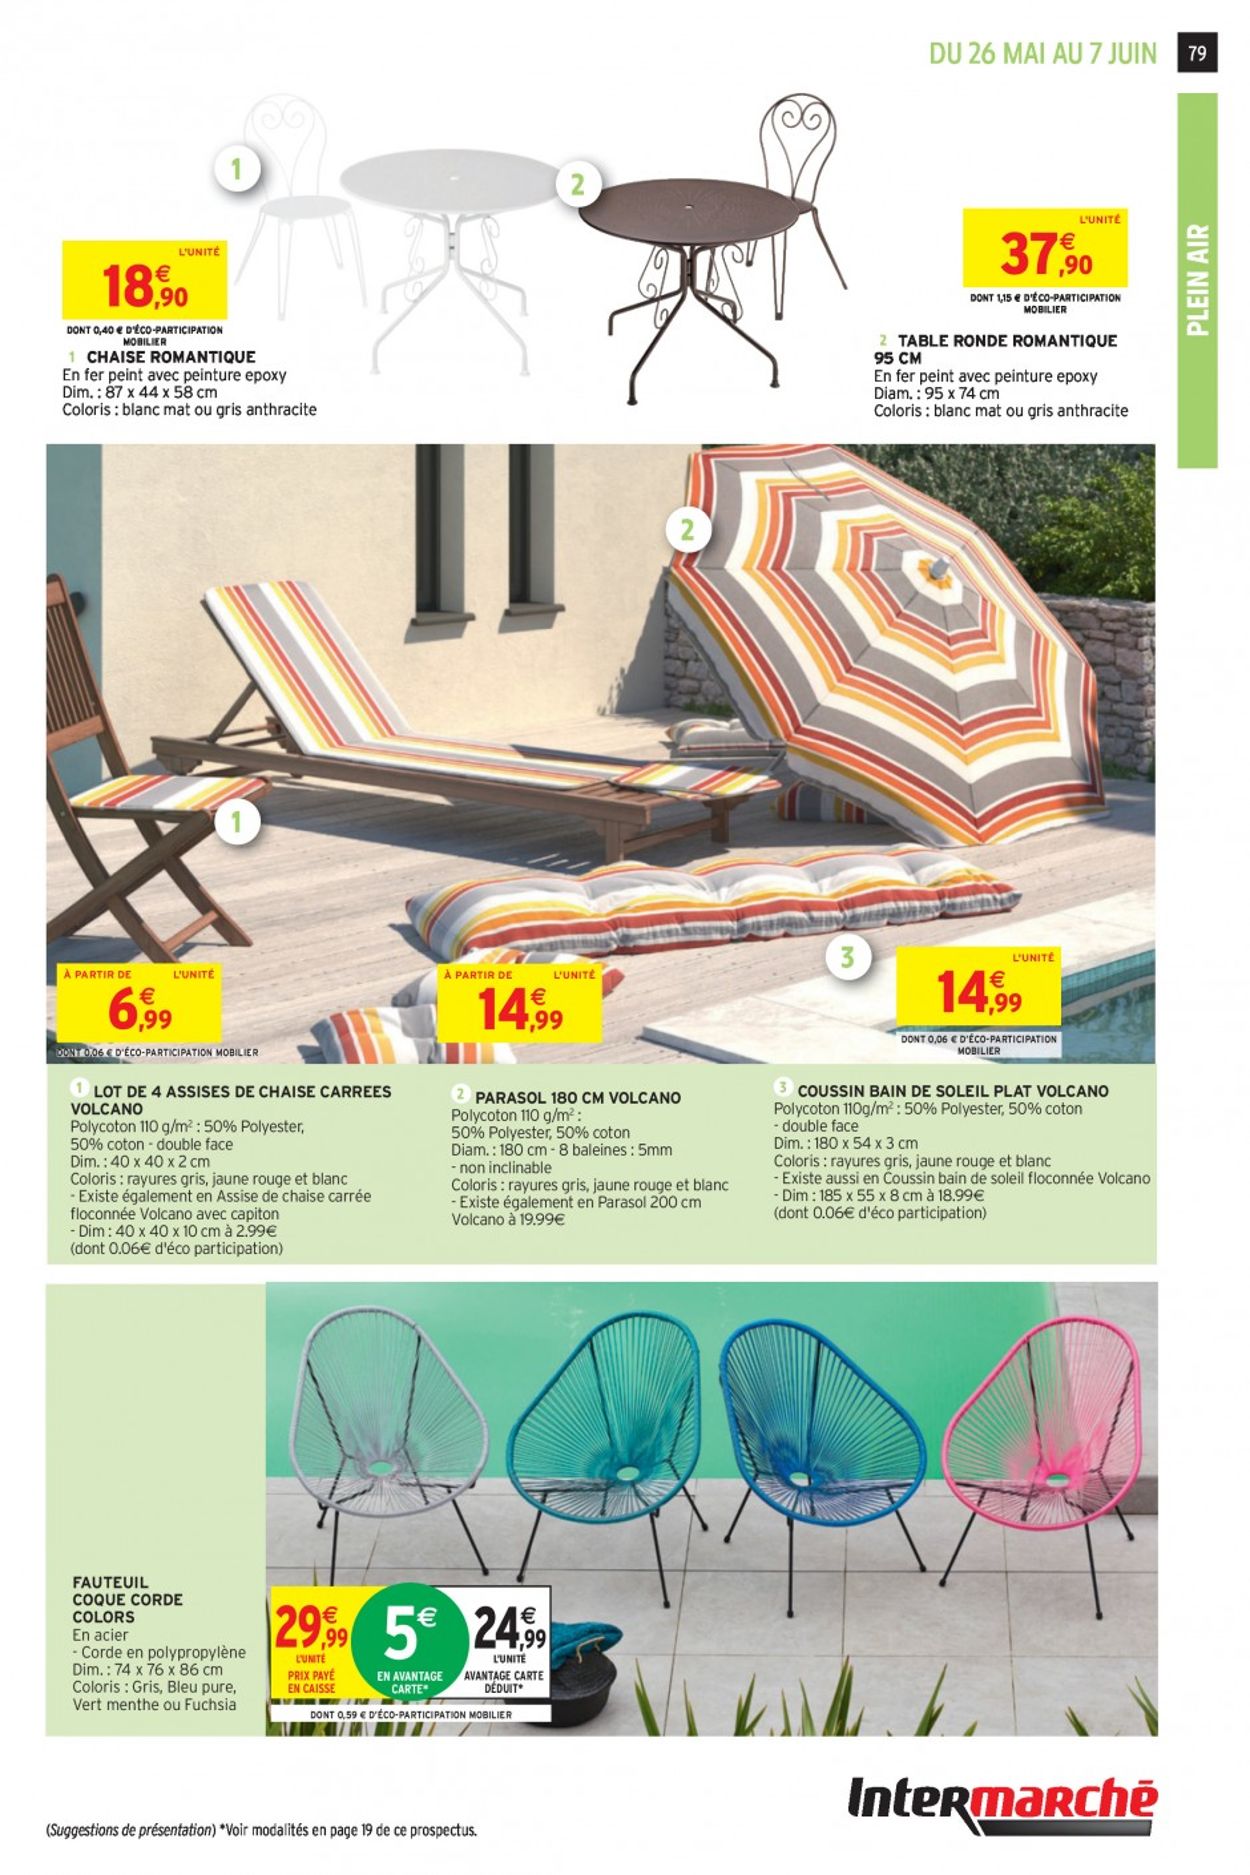 Intermarché Catalogue - 26.05-07.06.2020 (Page 76)